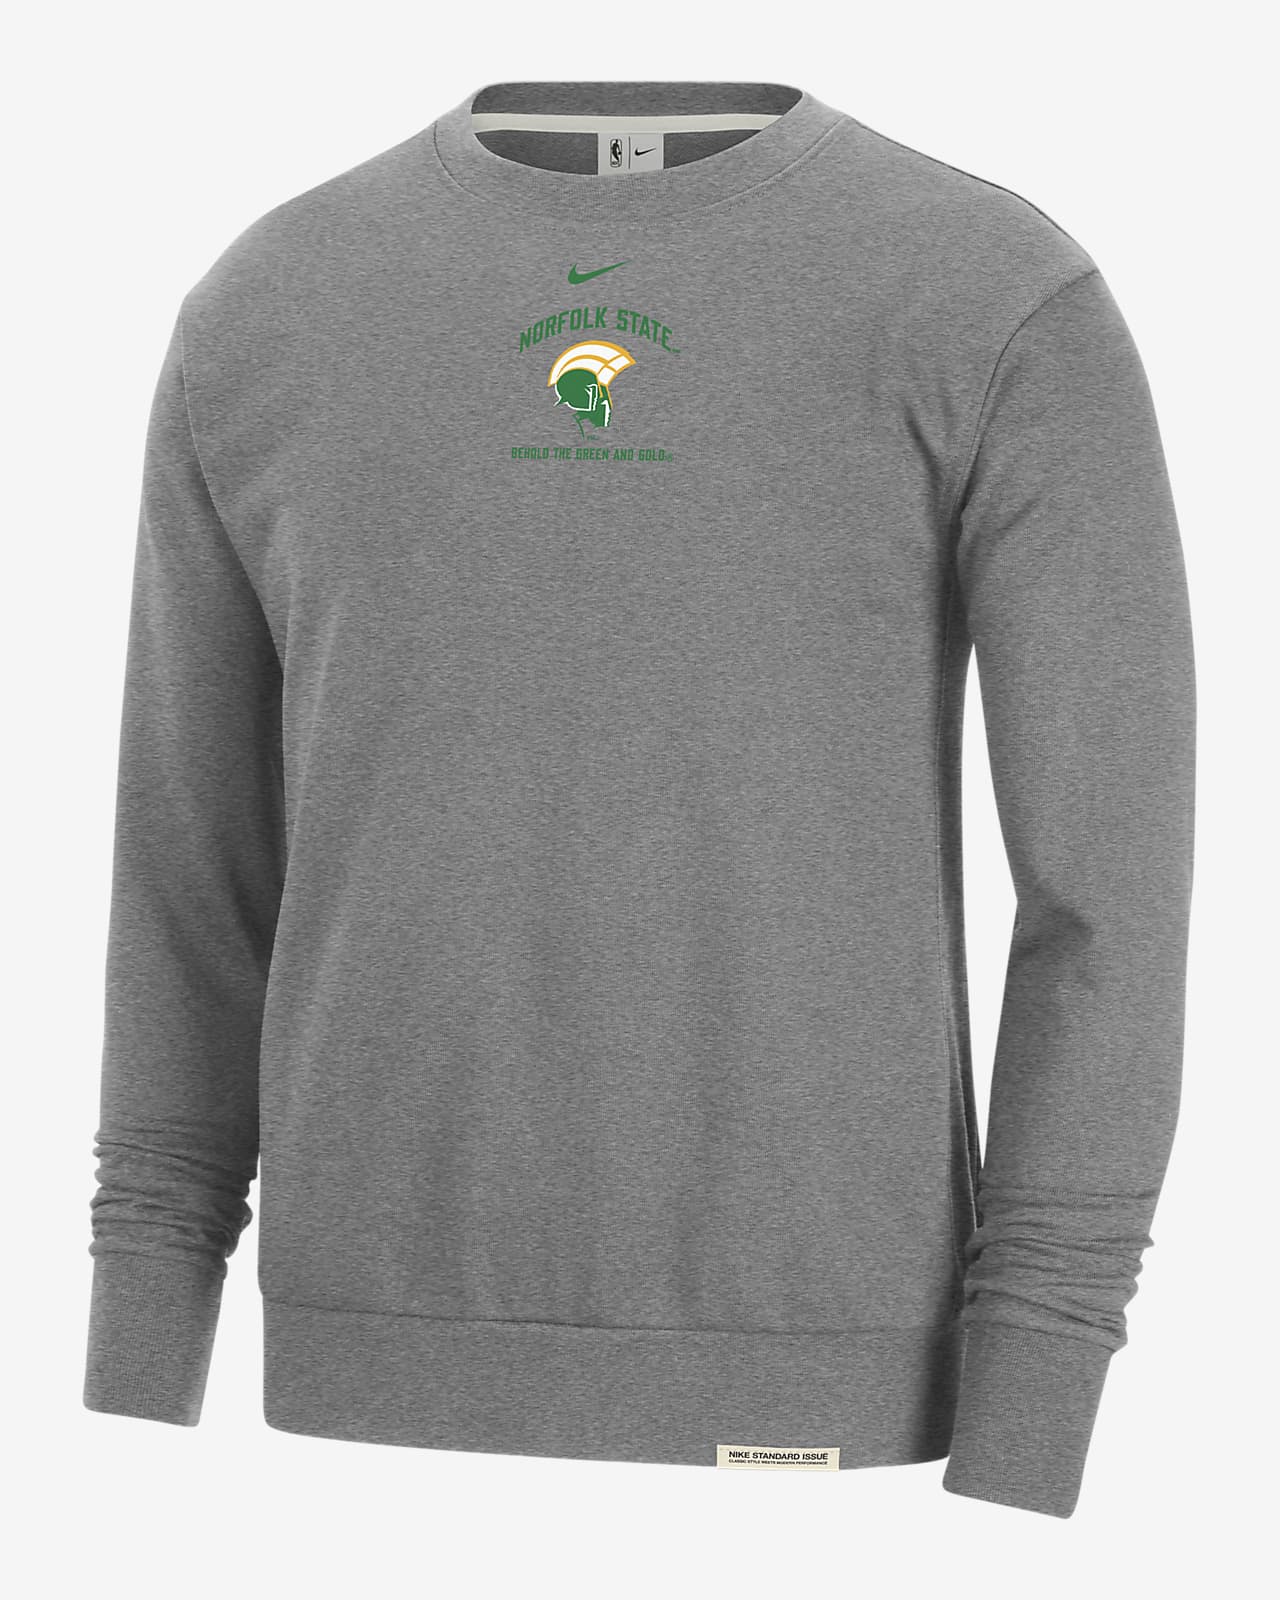 Norfolk State Standard Issue Men's Nike College Fleece Crew-Neck Sweatshirt